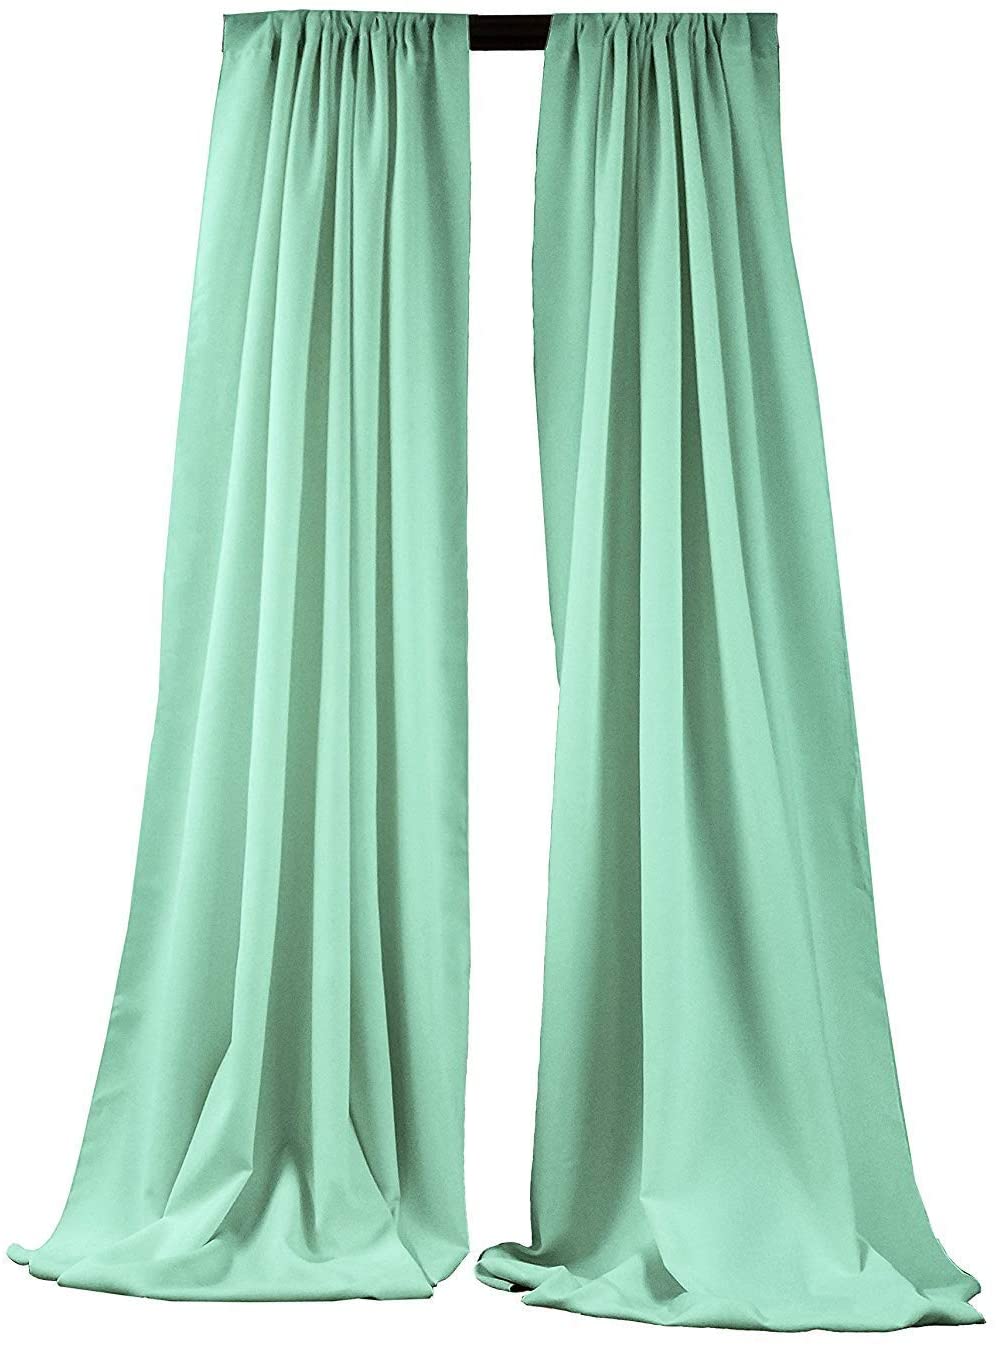 5 Feet Wide by 9 Feet High Polyester Backdrop Drape Curtain Panel - (Aqua Green,